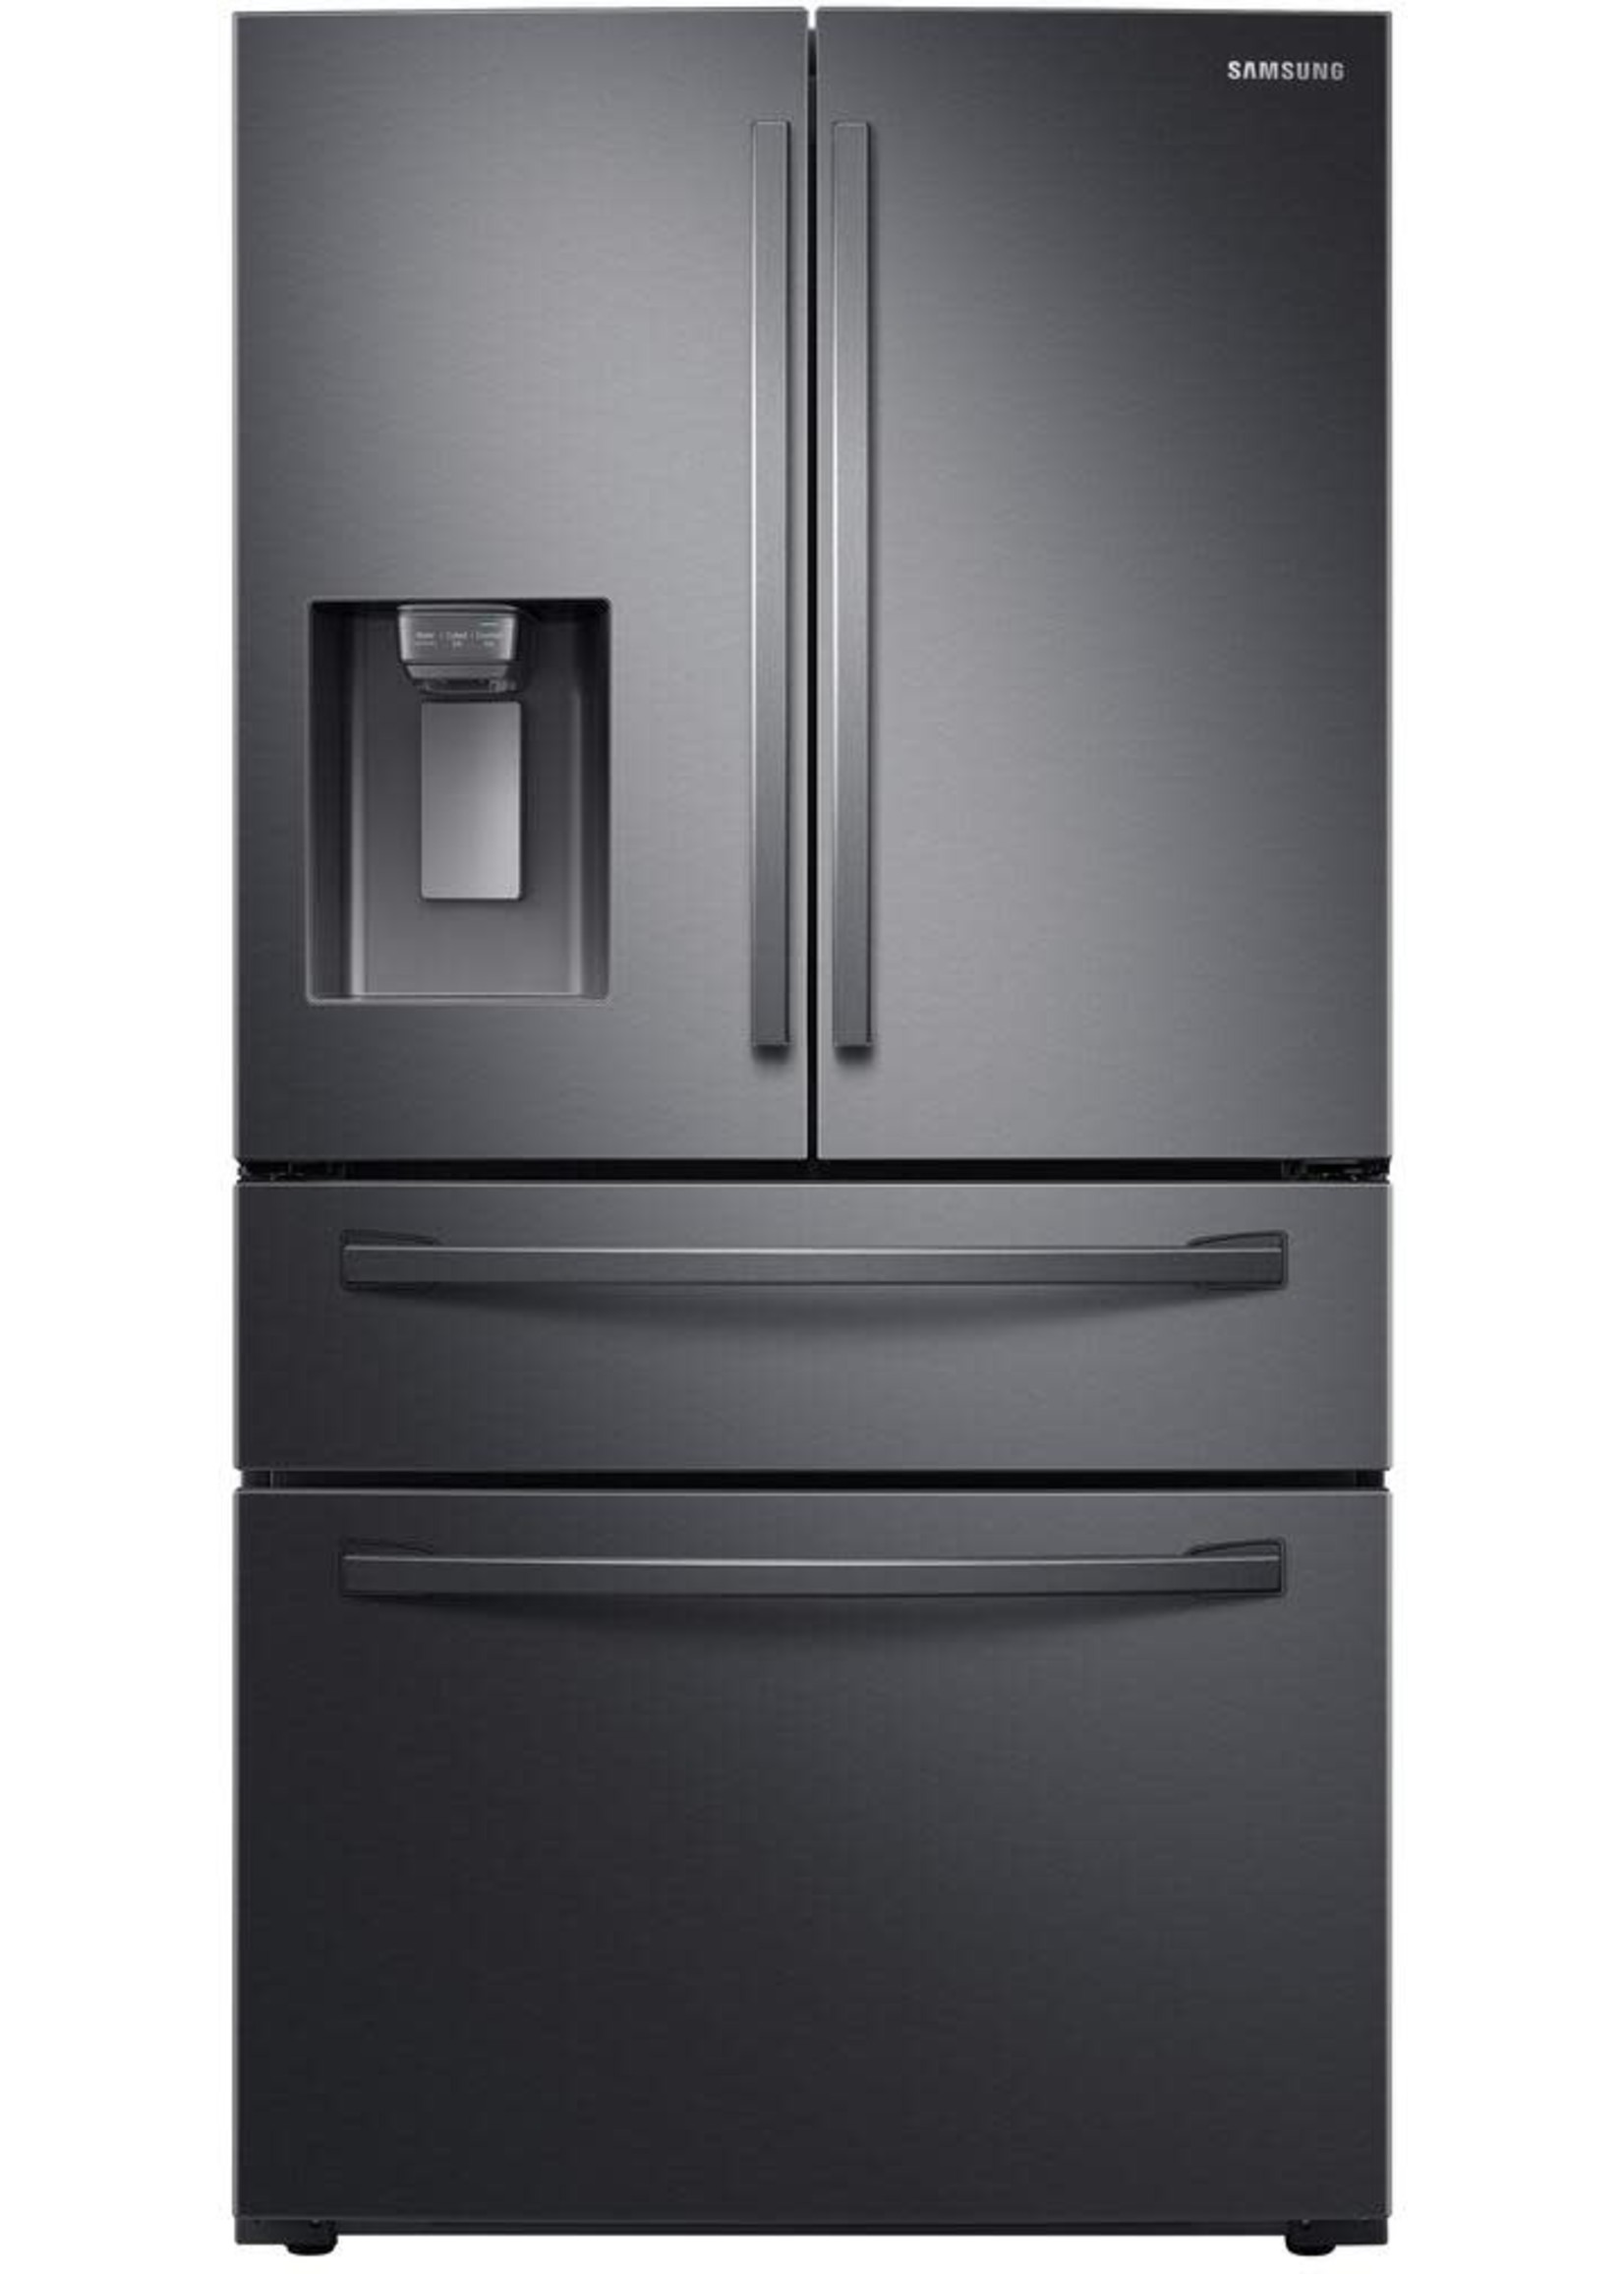 Samsung - 28 cu. ft. 4-Door French Door Refrigerator with FlexZone Drawer - Black stainless steel